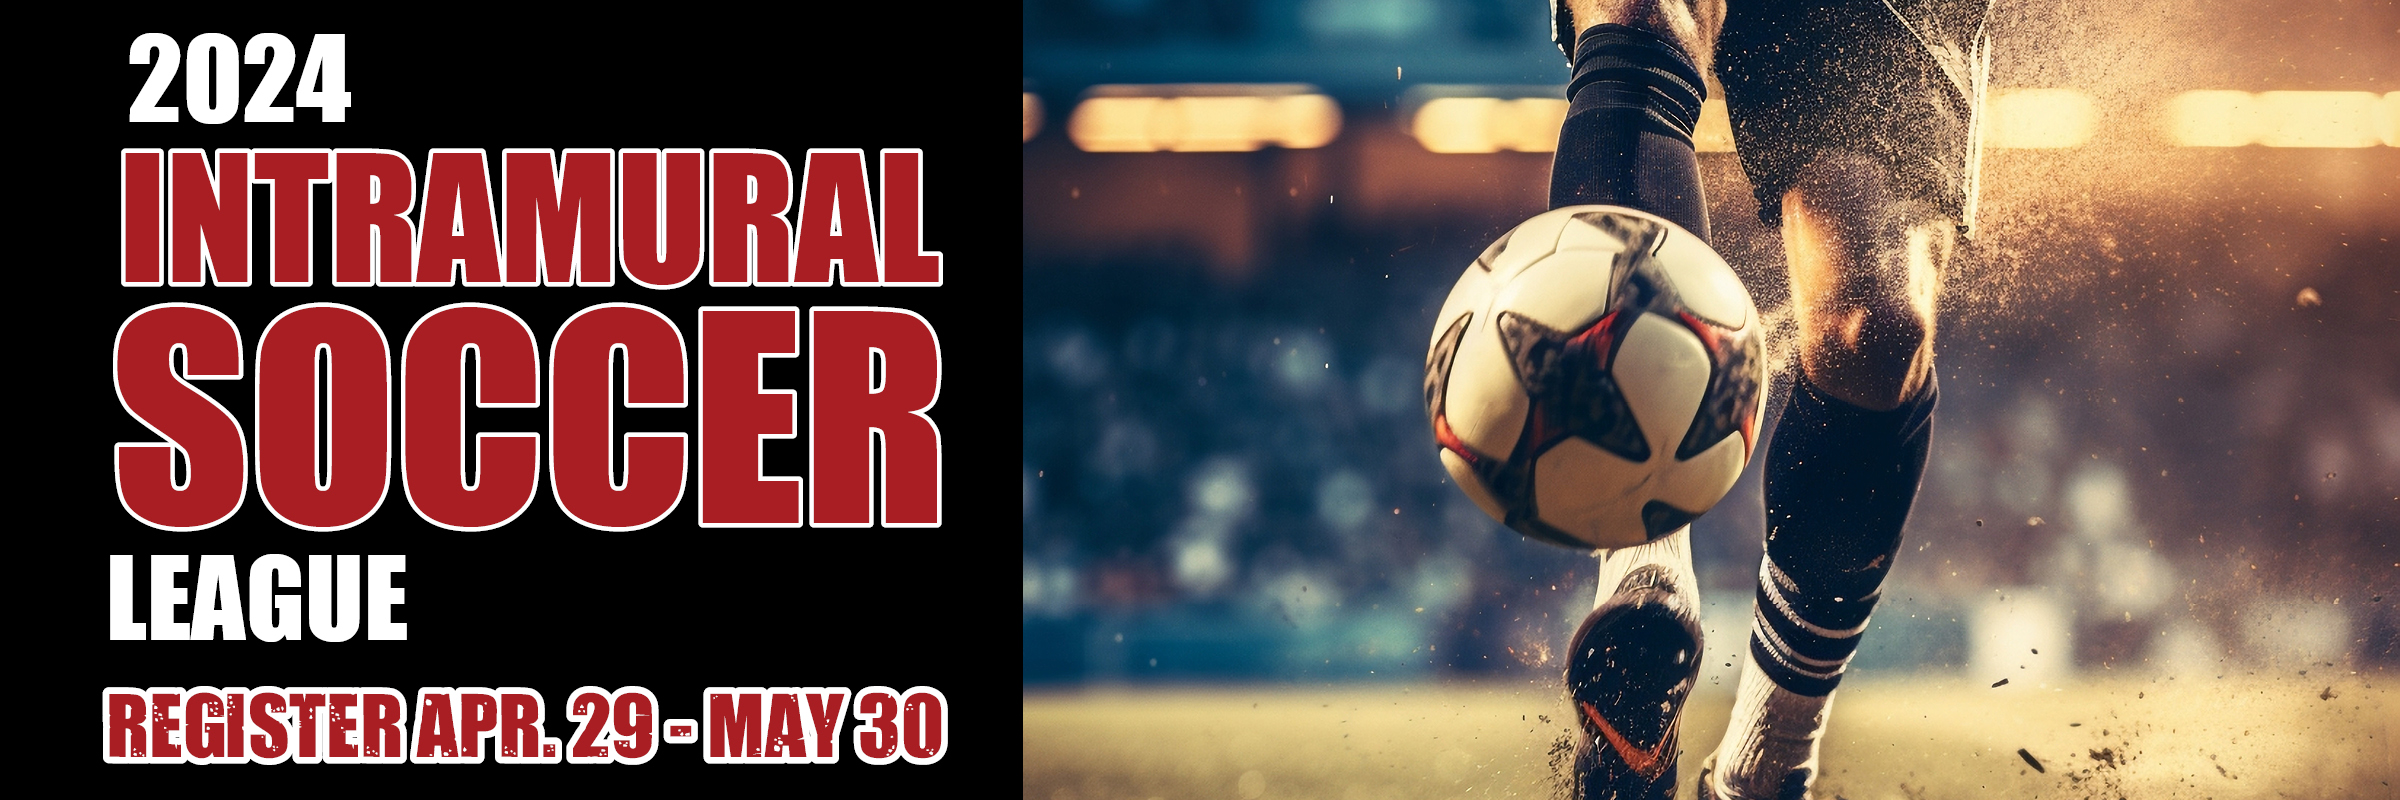 053024-intramuralsports-soccer-rotator.jpg